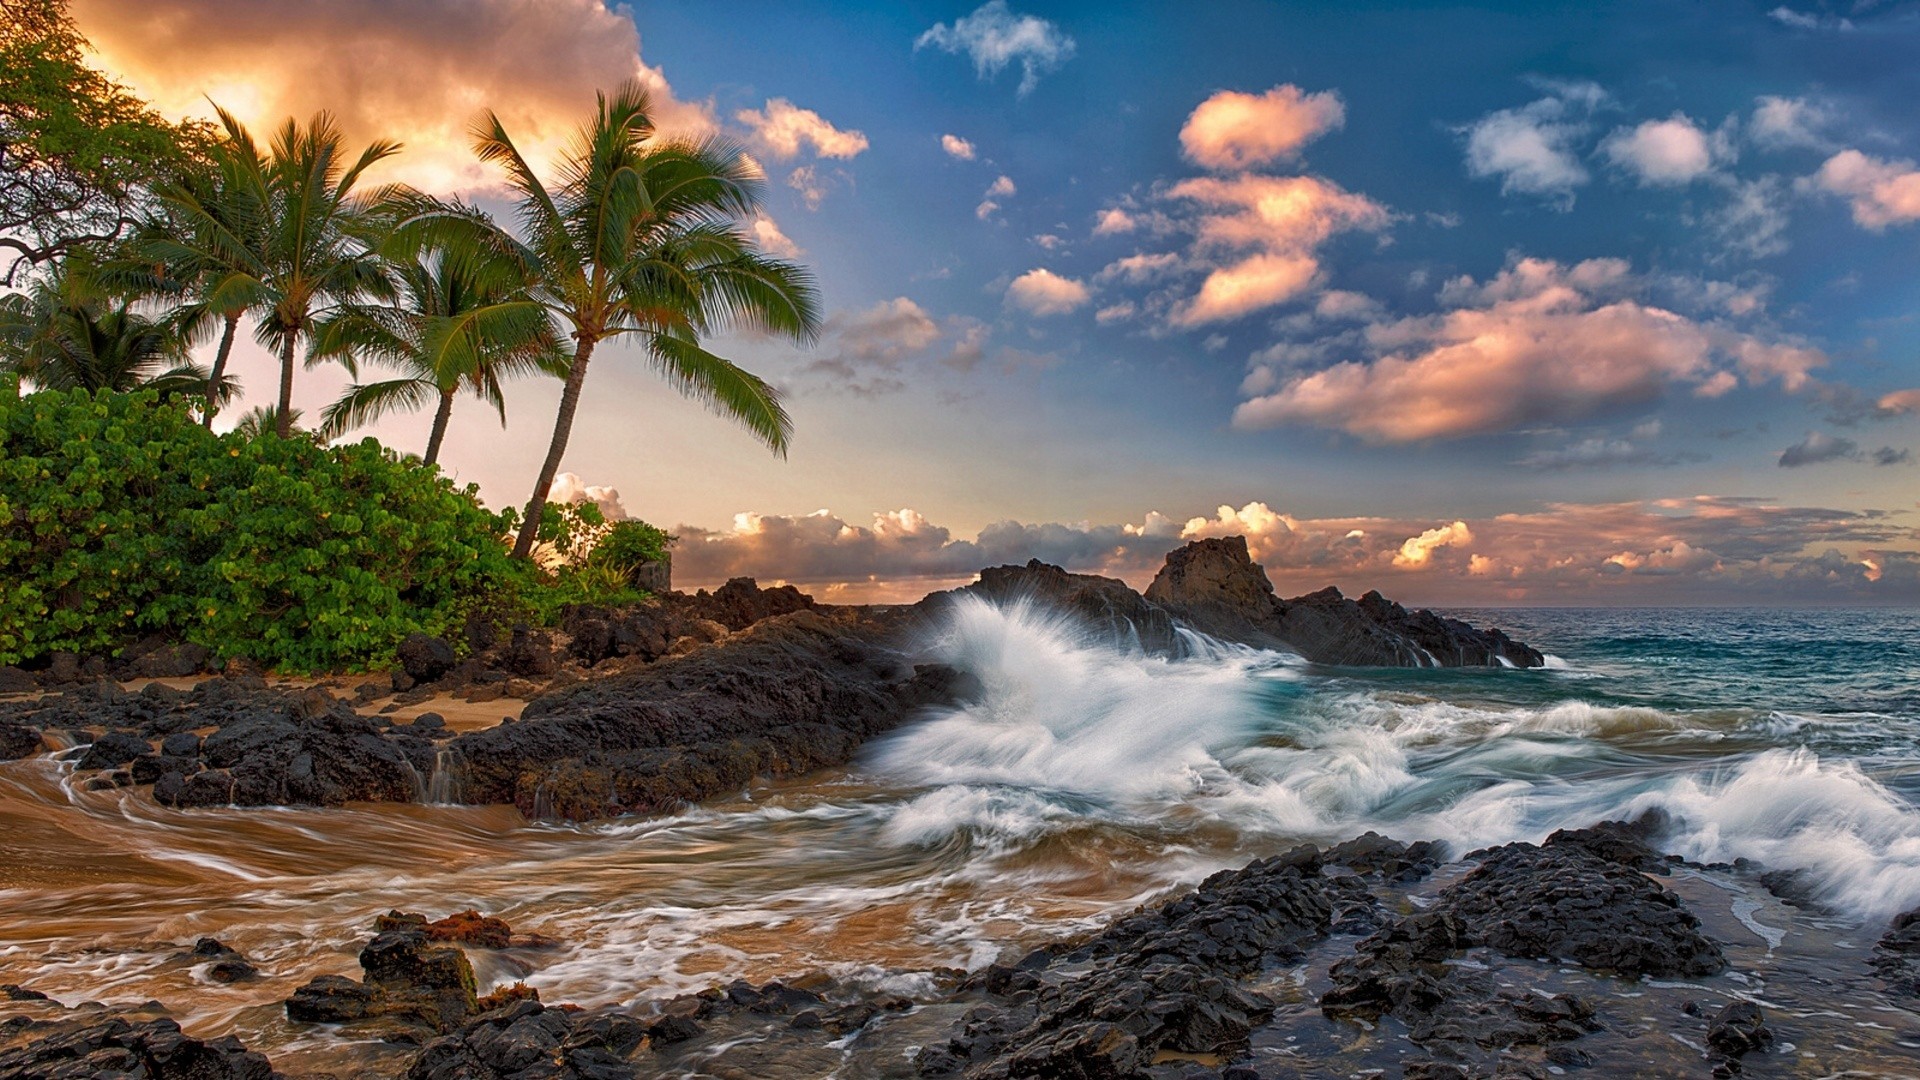 Hawaii HD Wallpaper Image